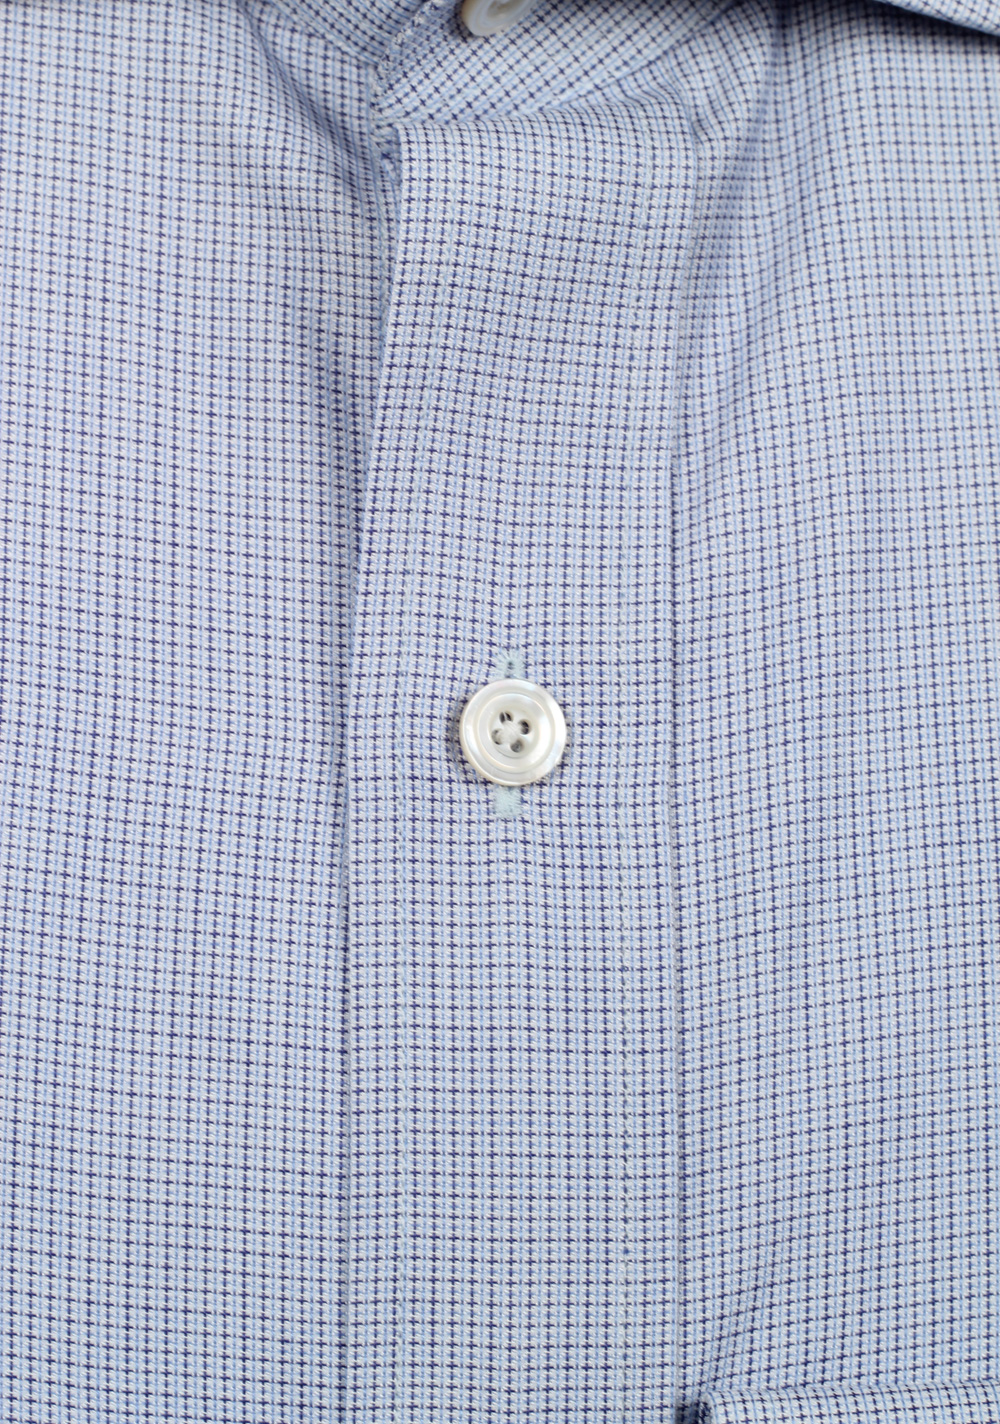 TOM FORD Checked White Blue Shirt Size 42 / 16,5 U.S. | Costume Limité